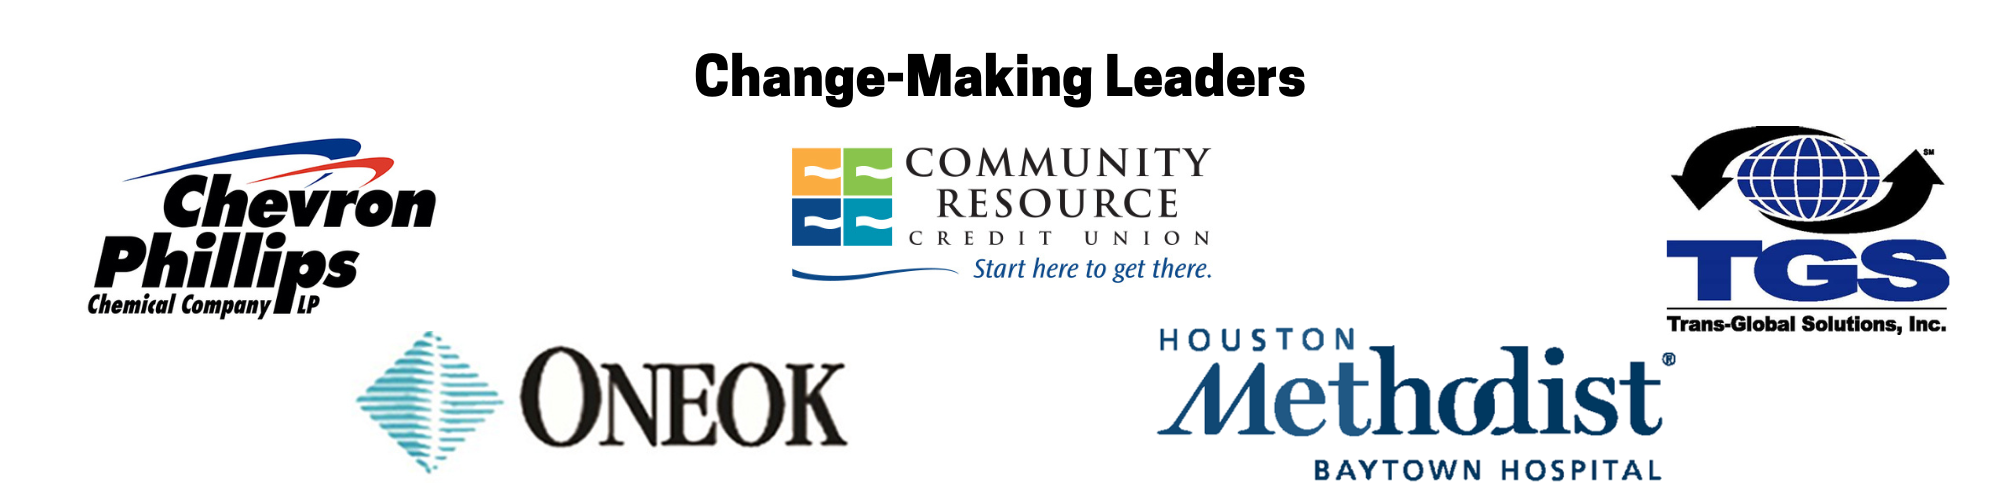 Change-Making Leaders